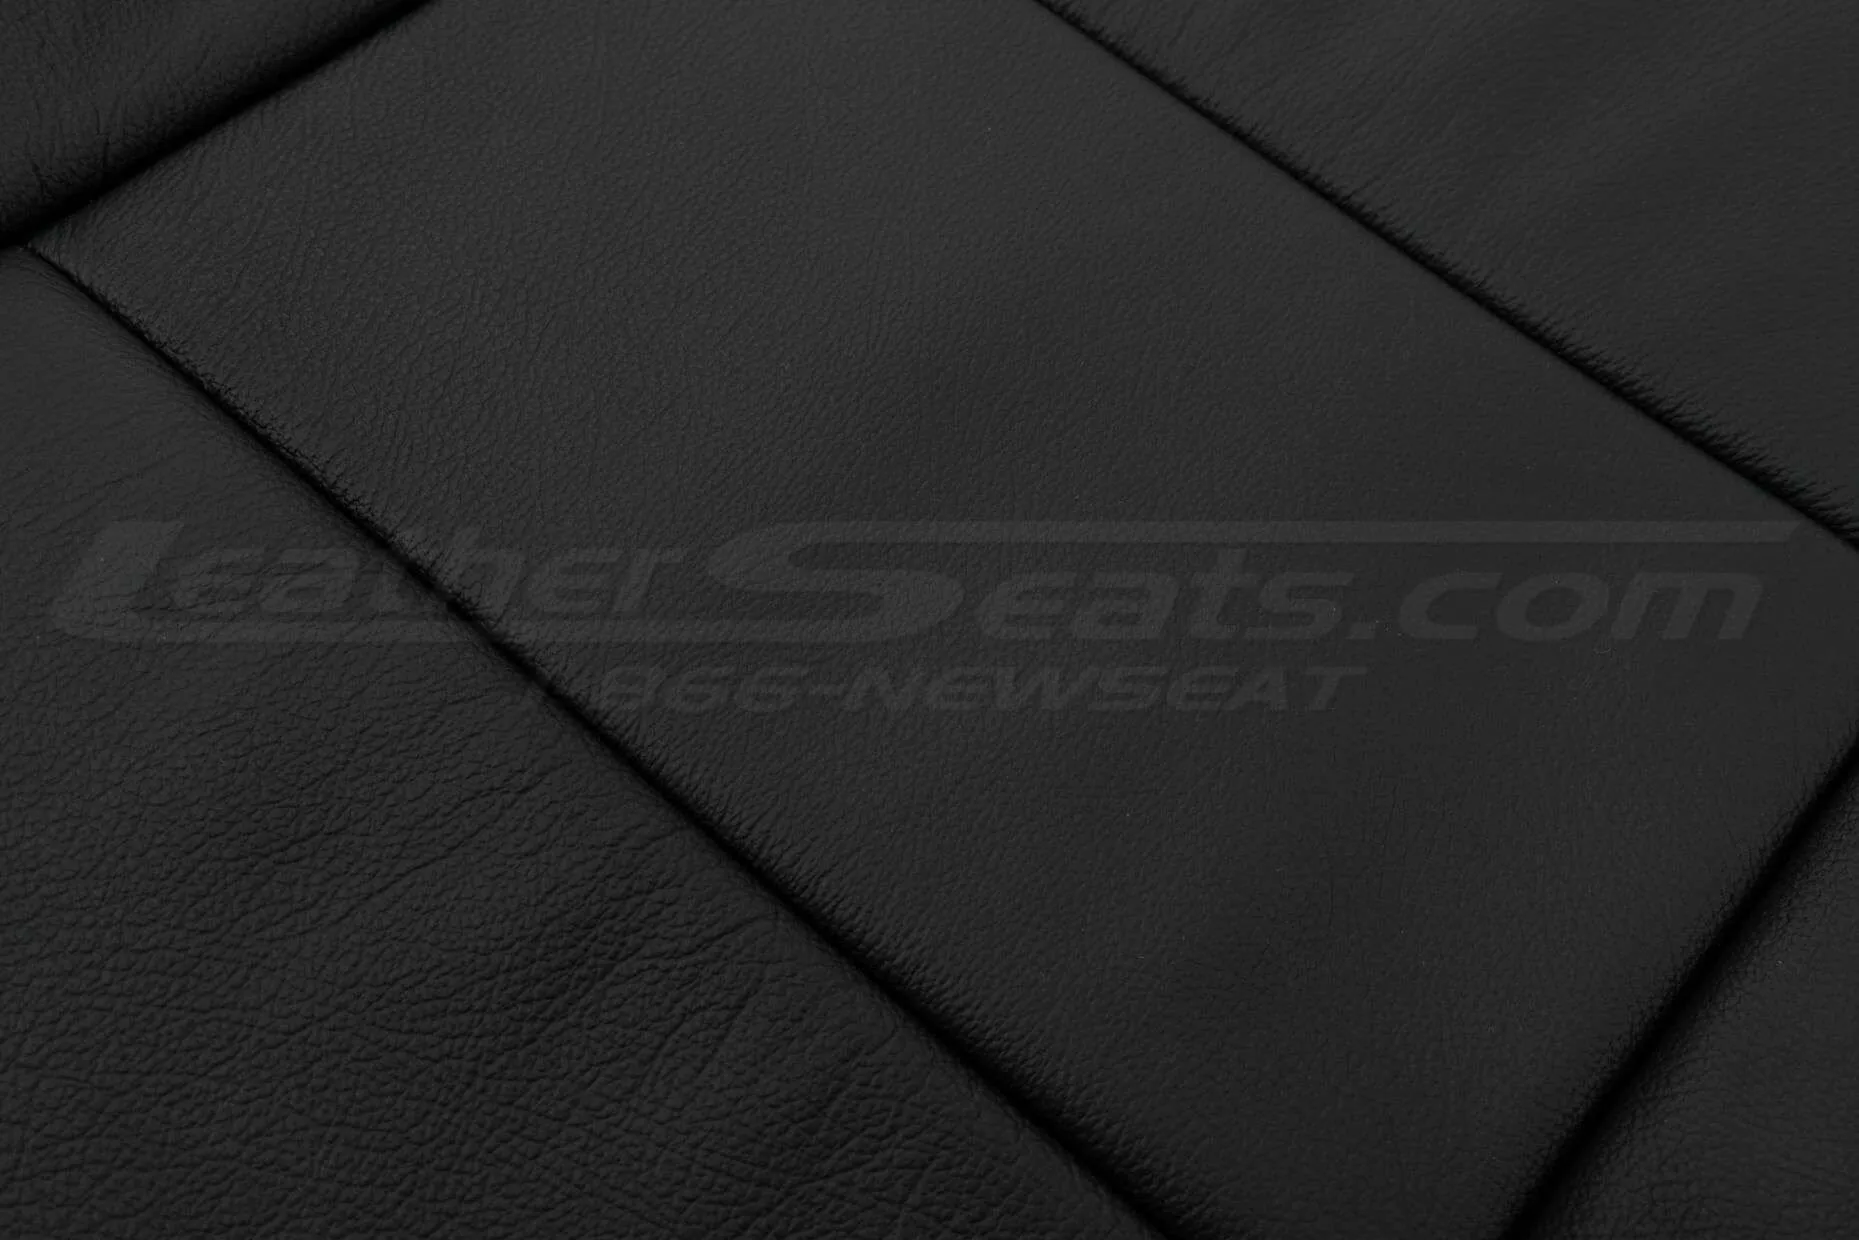 10-15 Chevrolet Camaro Upholstery Kit - Black - Insert close-up